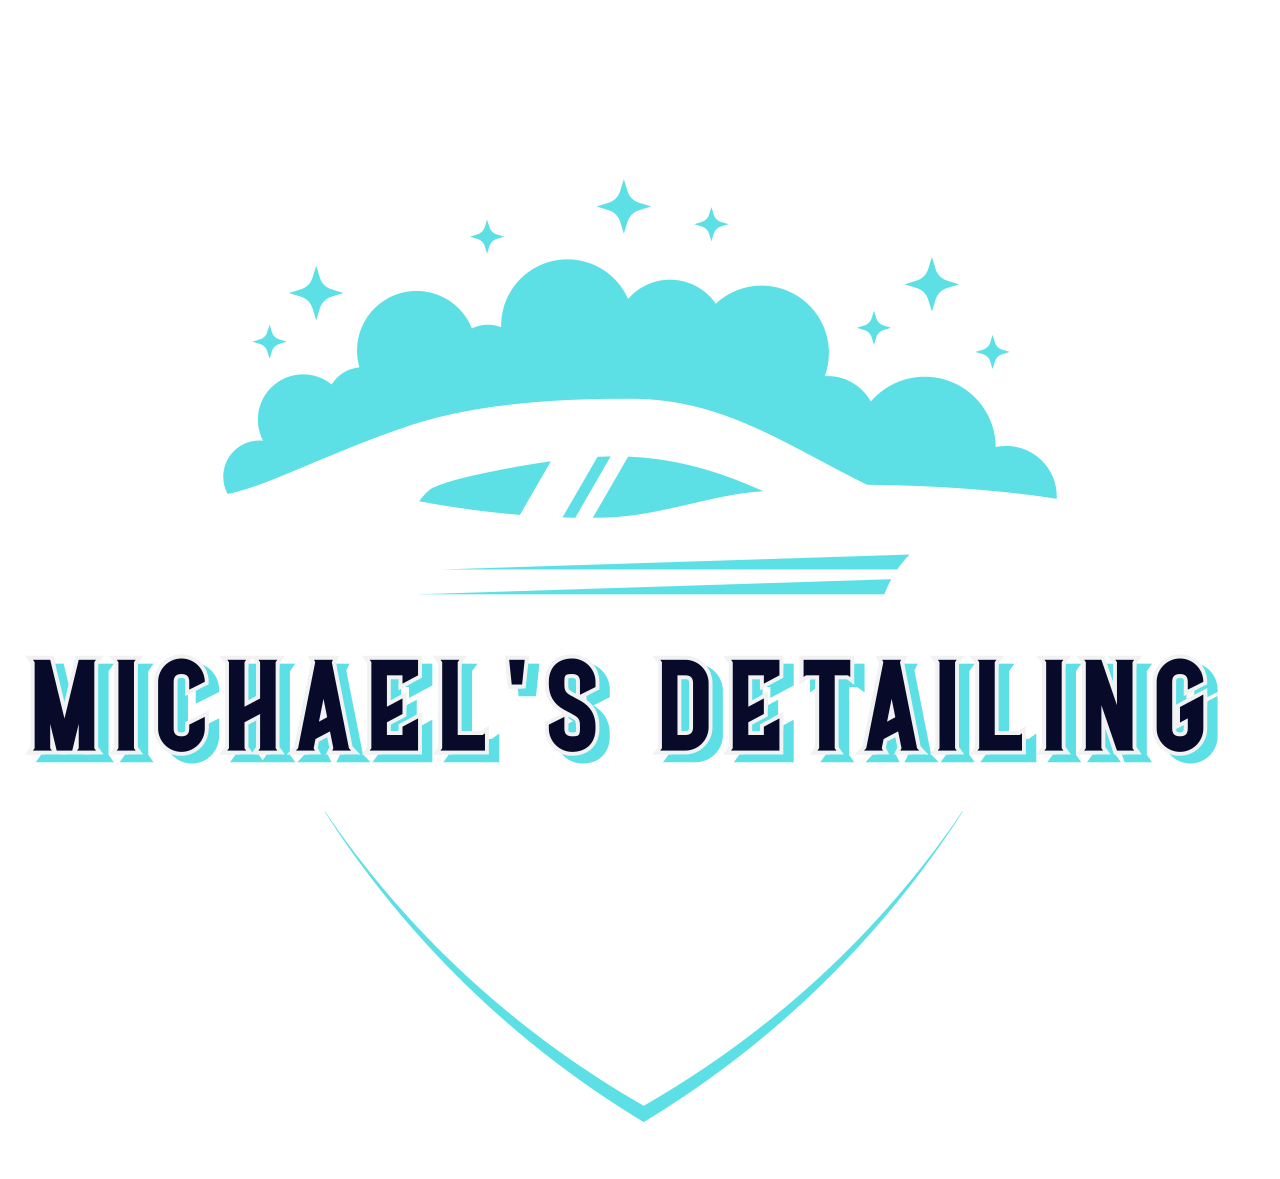 Michael's Detailing 's logo